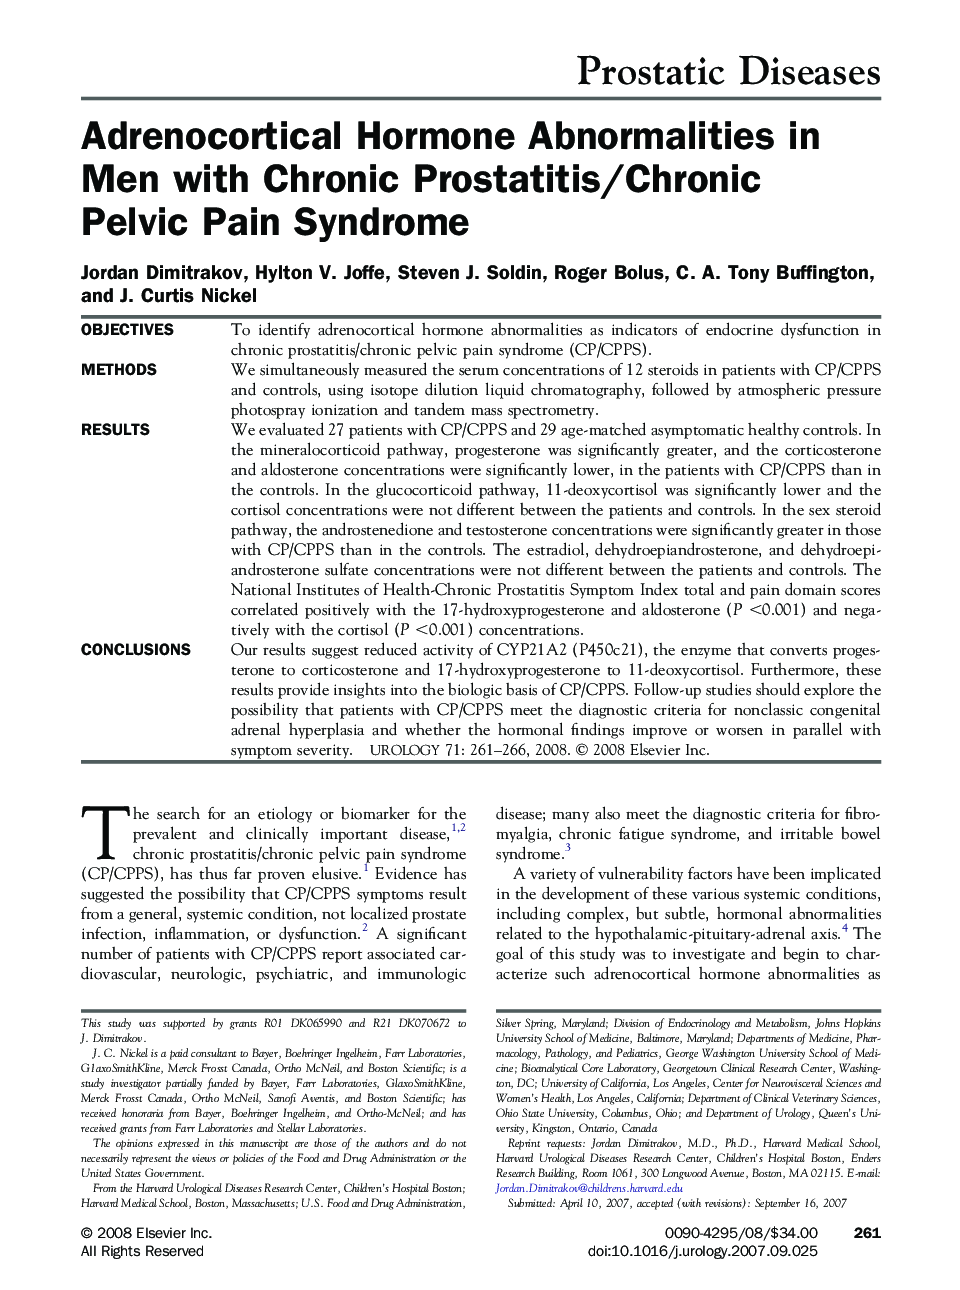 Adrenocortical Hormone Abnormalities in Men with Chronic Prostatitis/Chronic Pelvic Pain Syndrome 